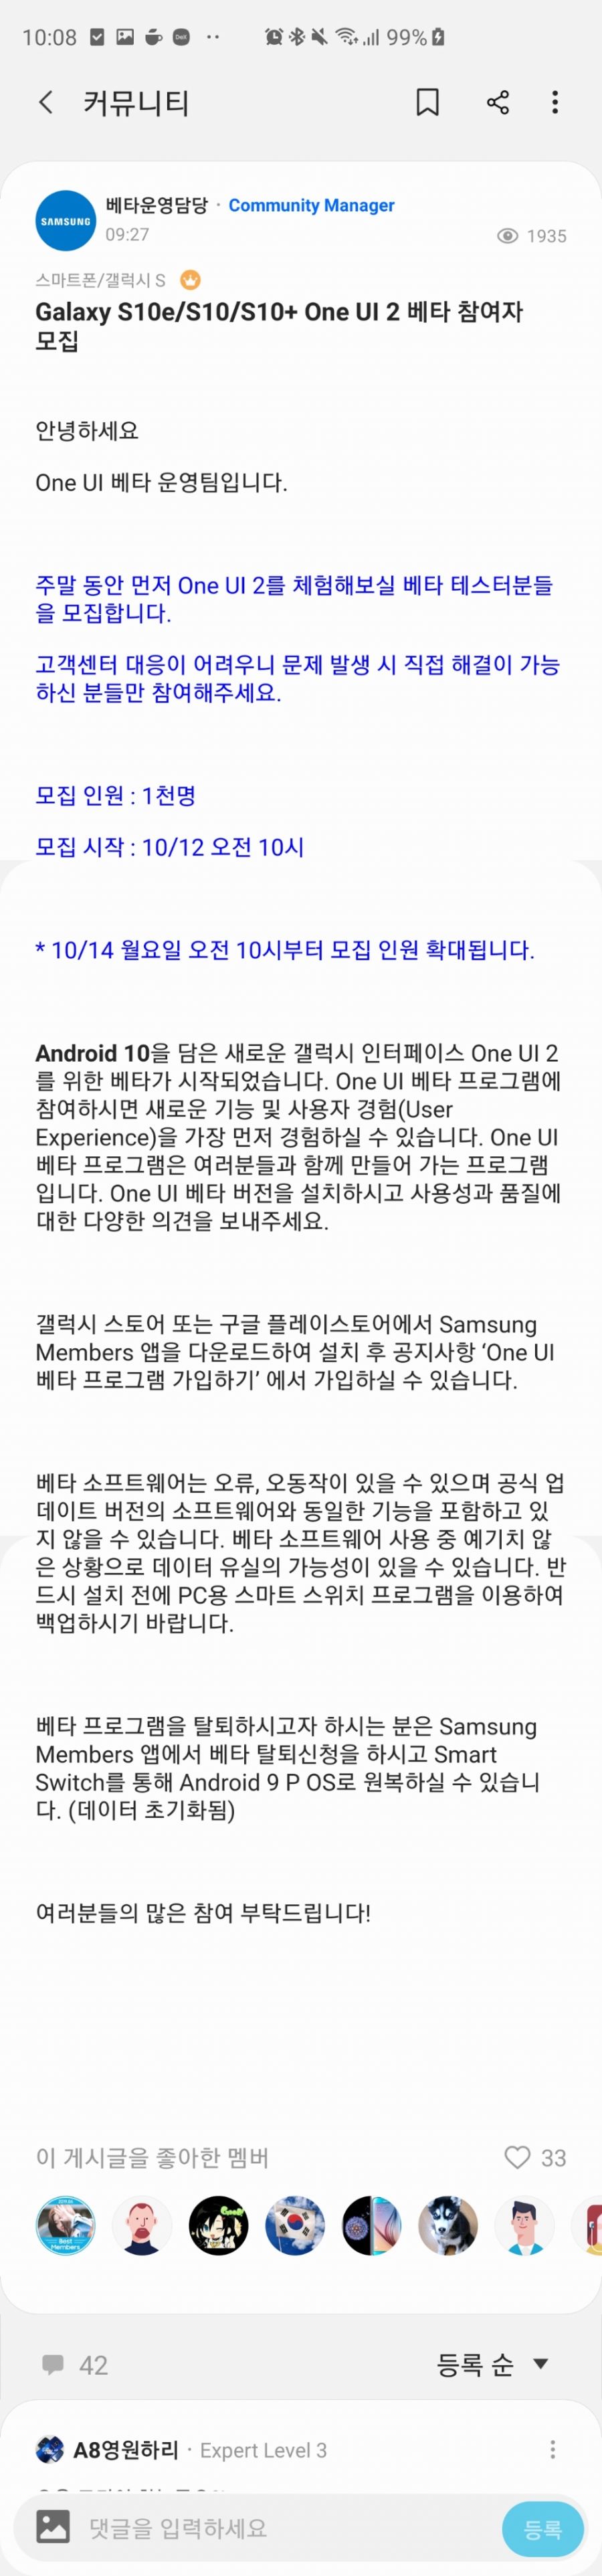 Screenshot_20191012-100806_Samsung Members.jpg